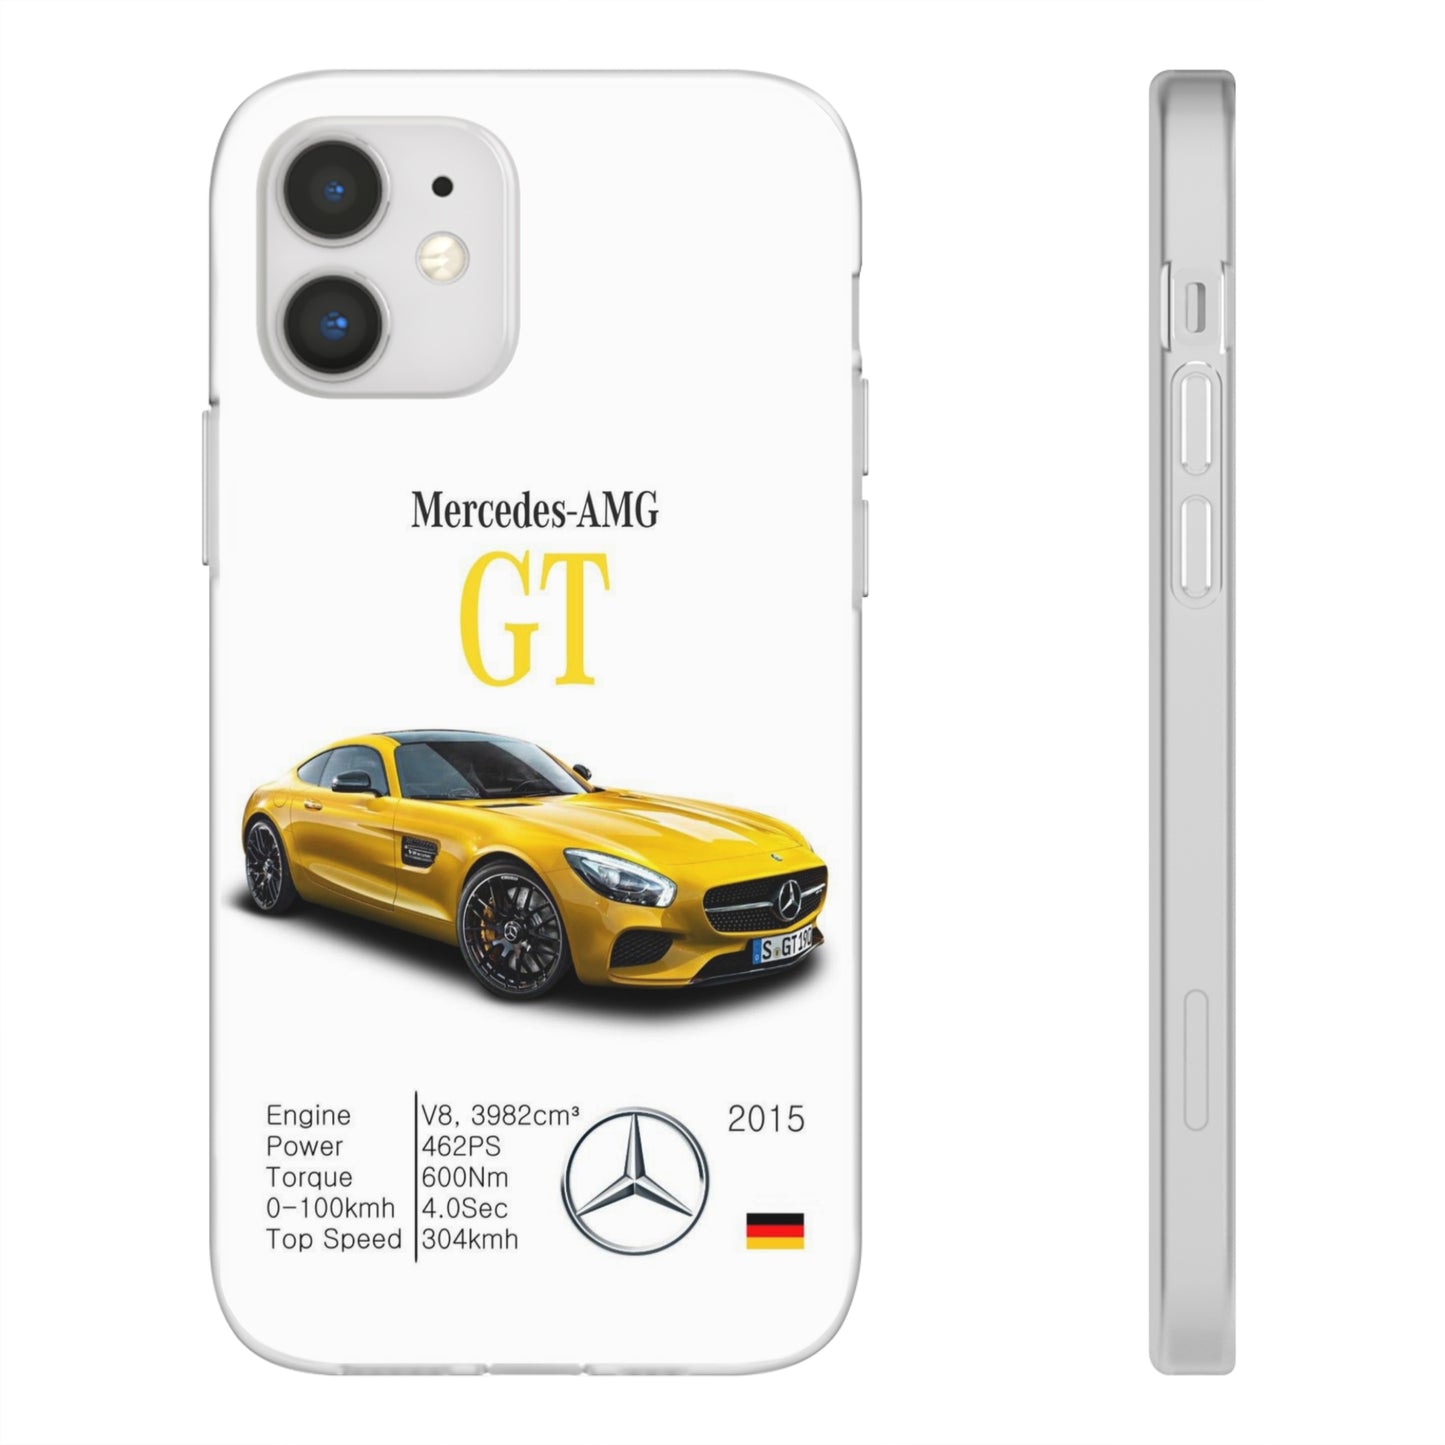 Mercedes AMG GT Phone Case